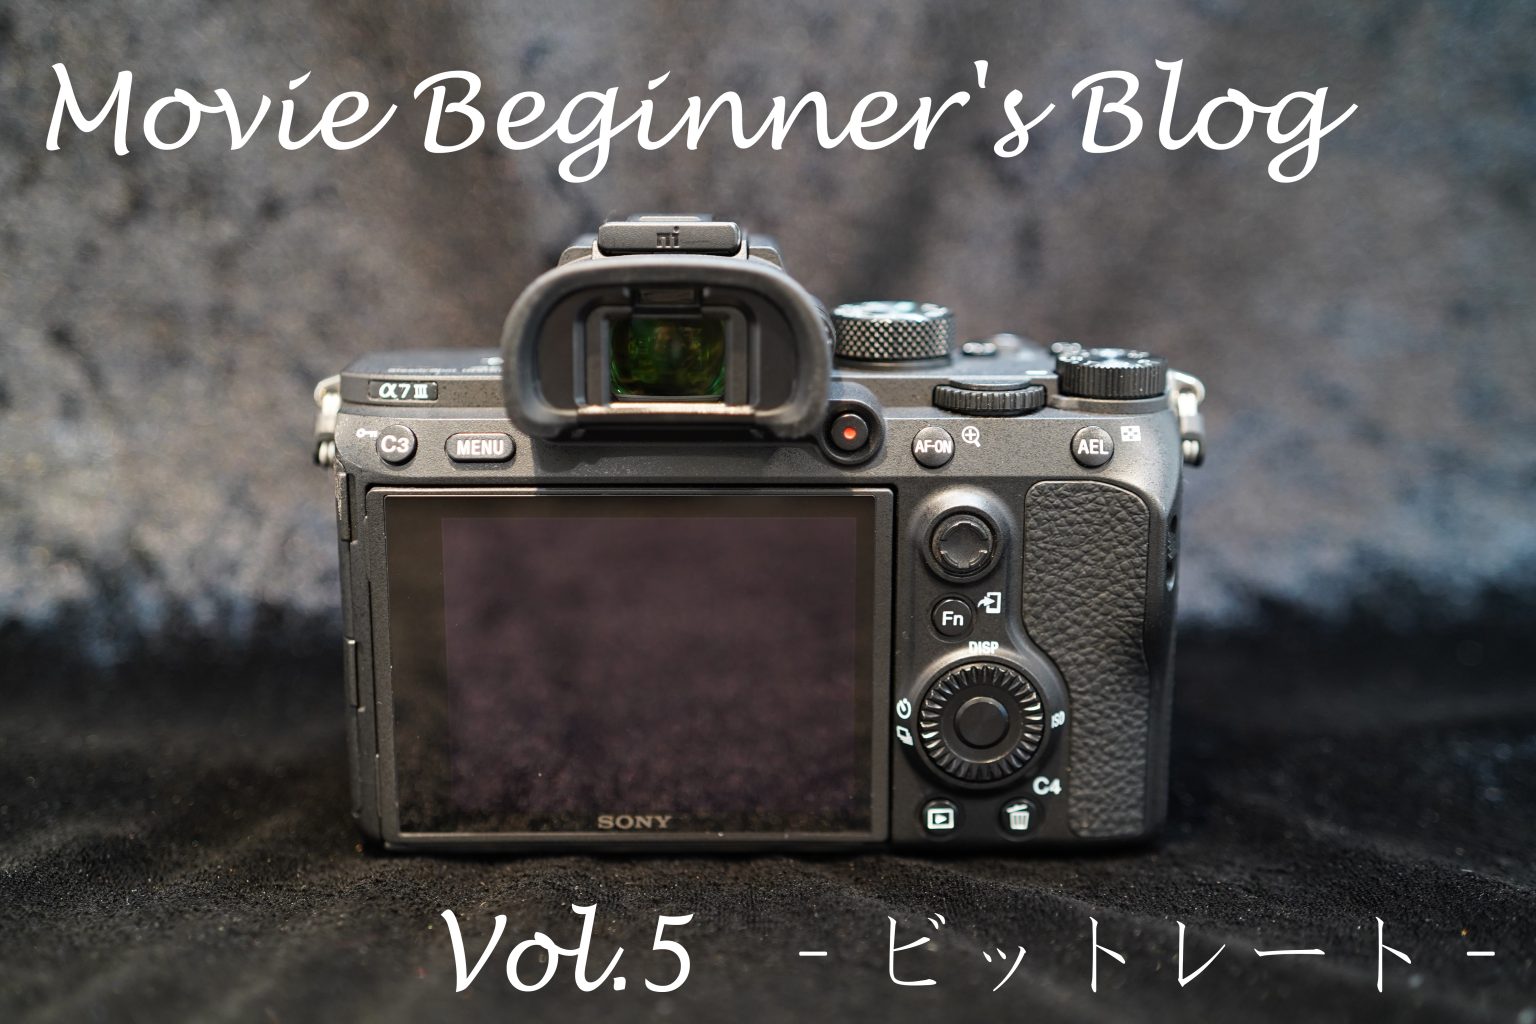 【SONY】Movie Beginner’s Blog Vol.5 -ビットレート-